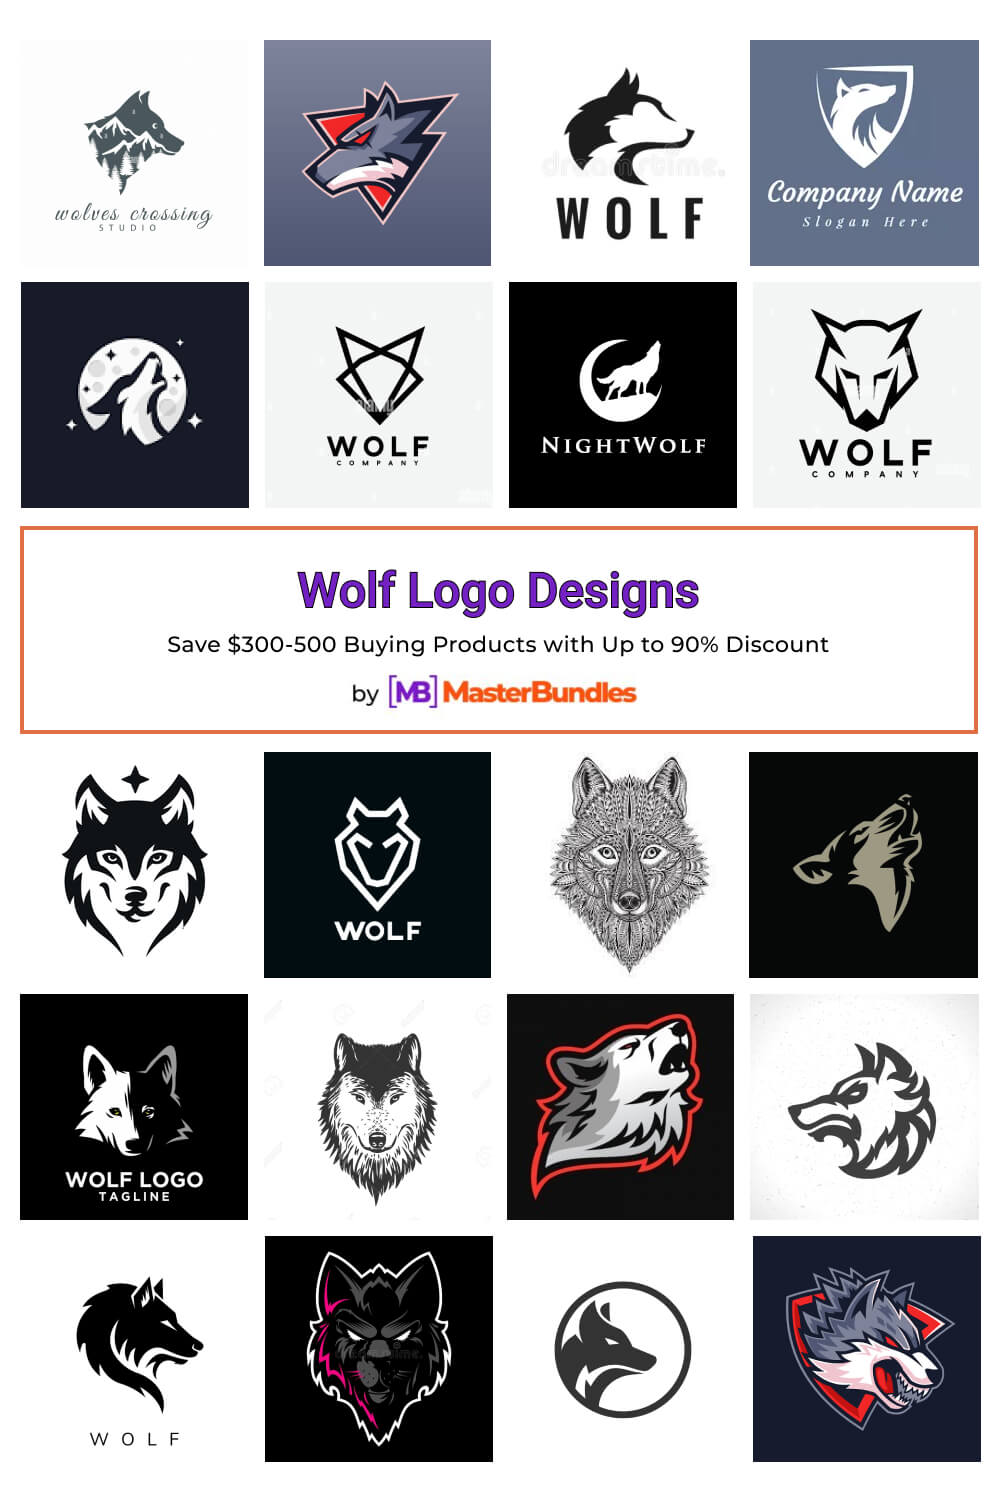 wolf logo designs pinterest image.